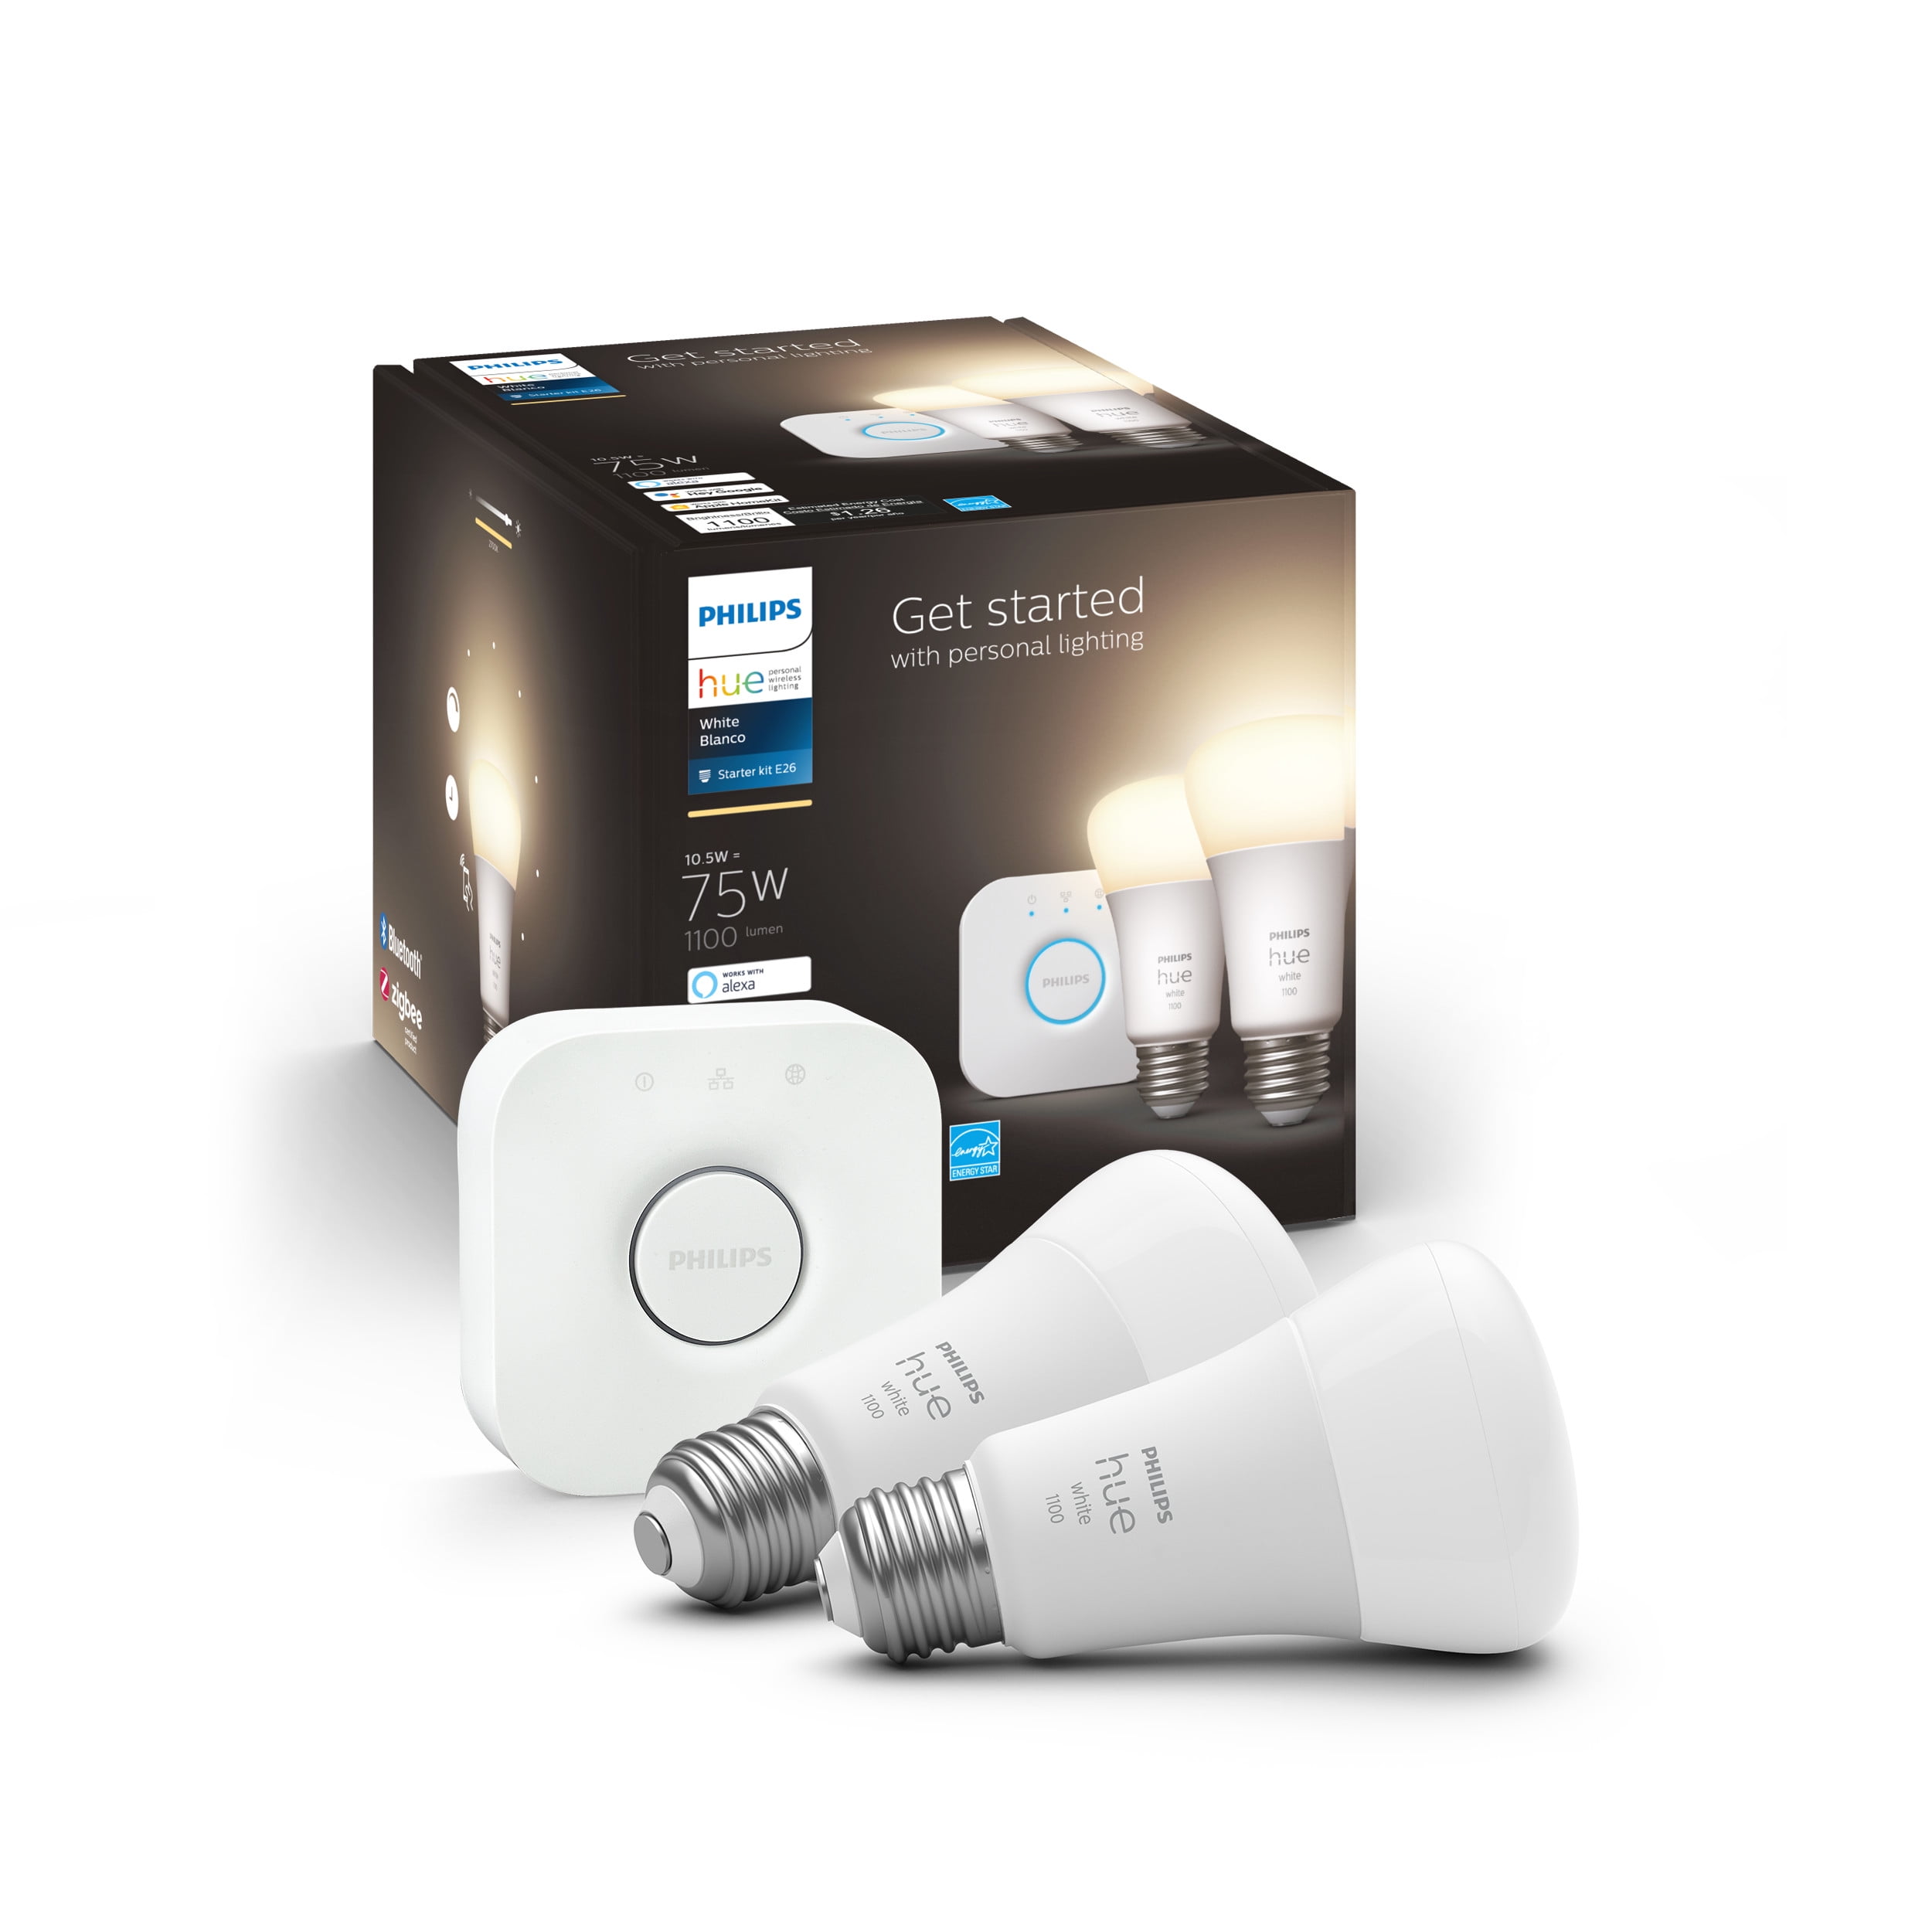 Philips Hue White A19 Bluetooth 75W Smart LED Starter Kit, White 